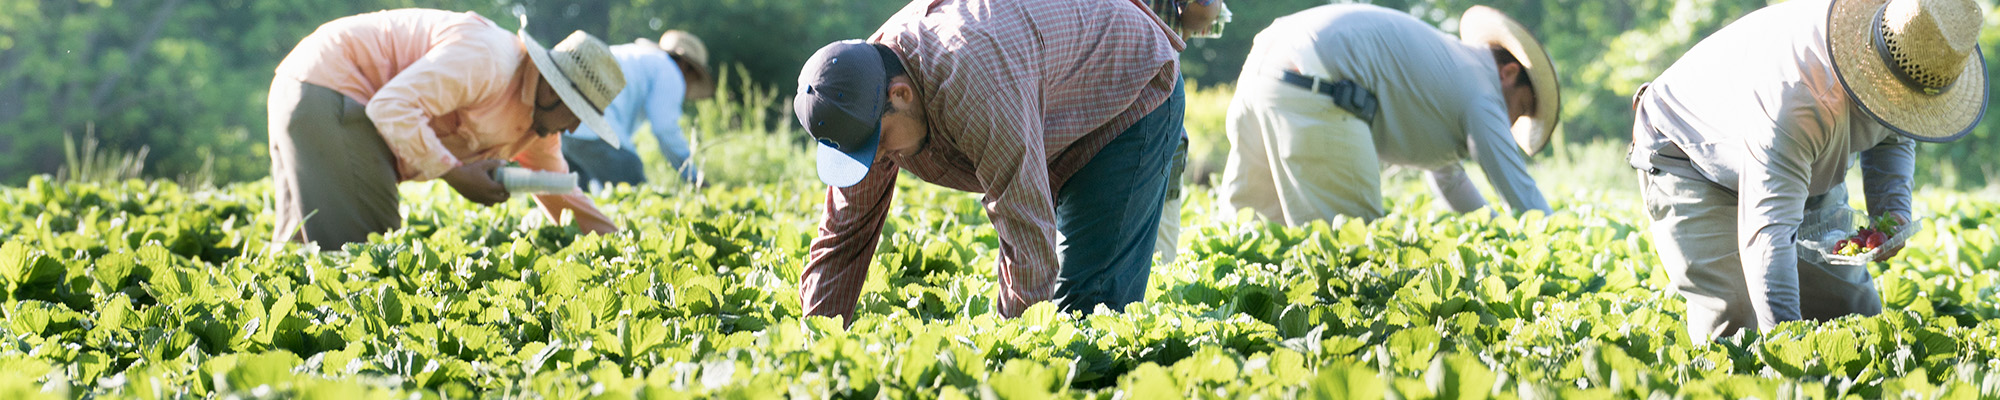 workers picking strawberries